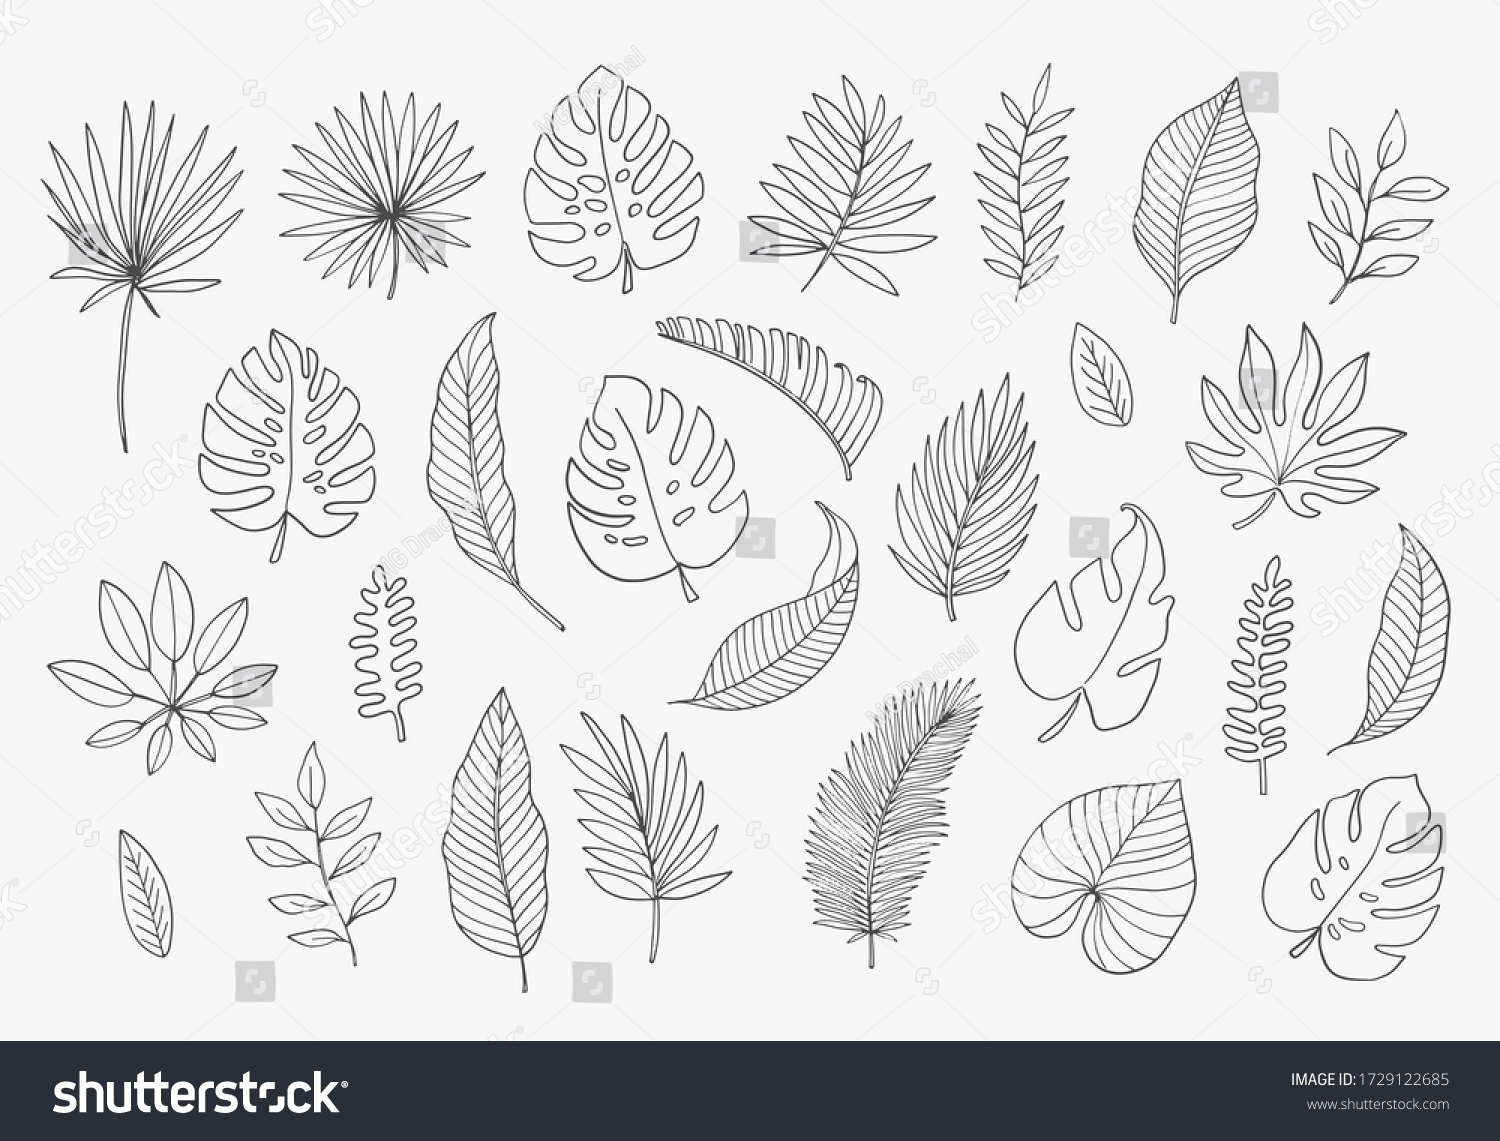 SVG of Tropical Leaves in doodle style. Vector hand drawn black line design elements. Exotic summer botanical illustrations. Monstera leaves, palm, banana leaf.
 svg